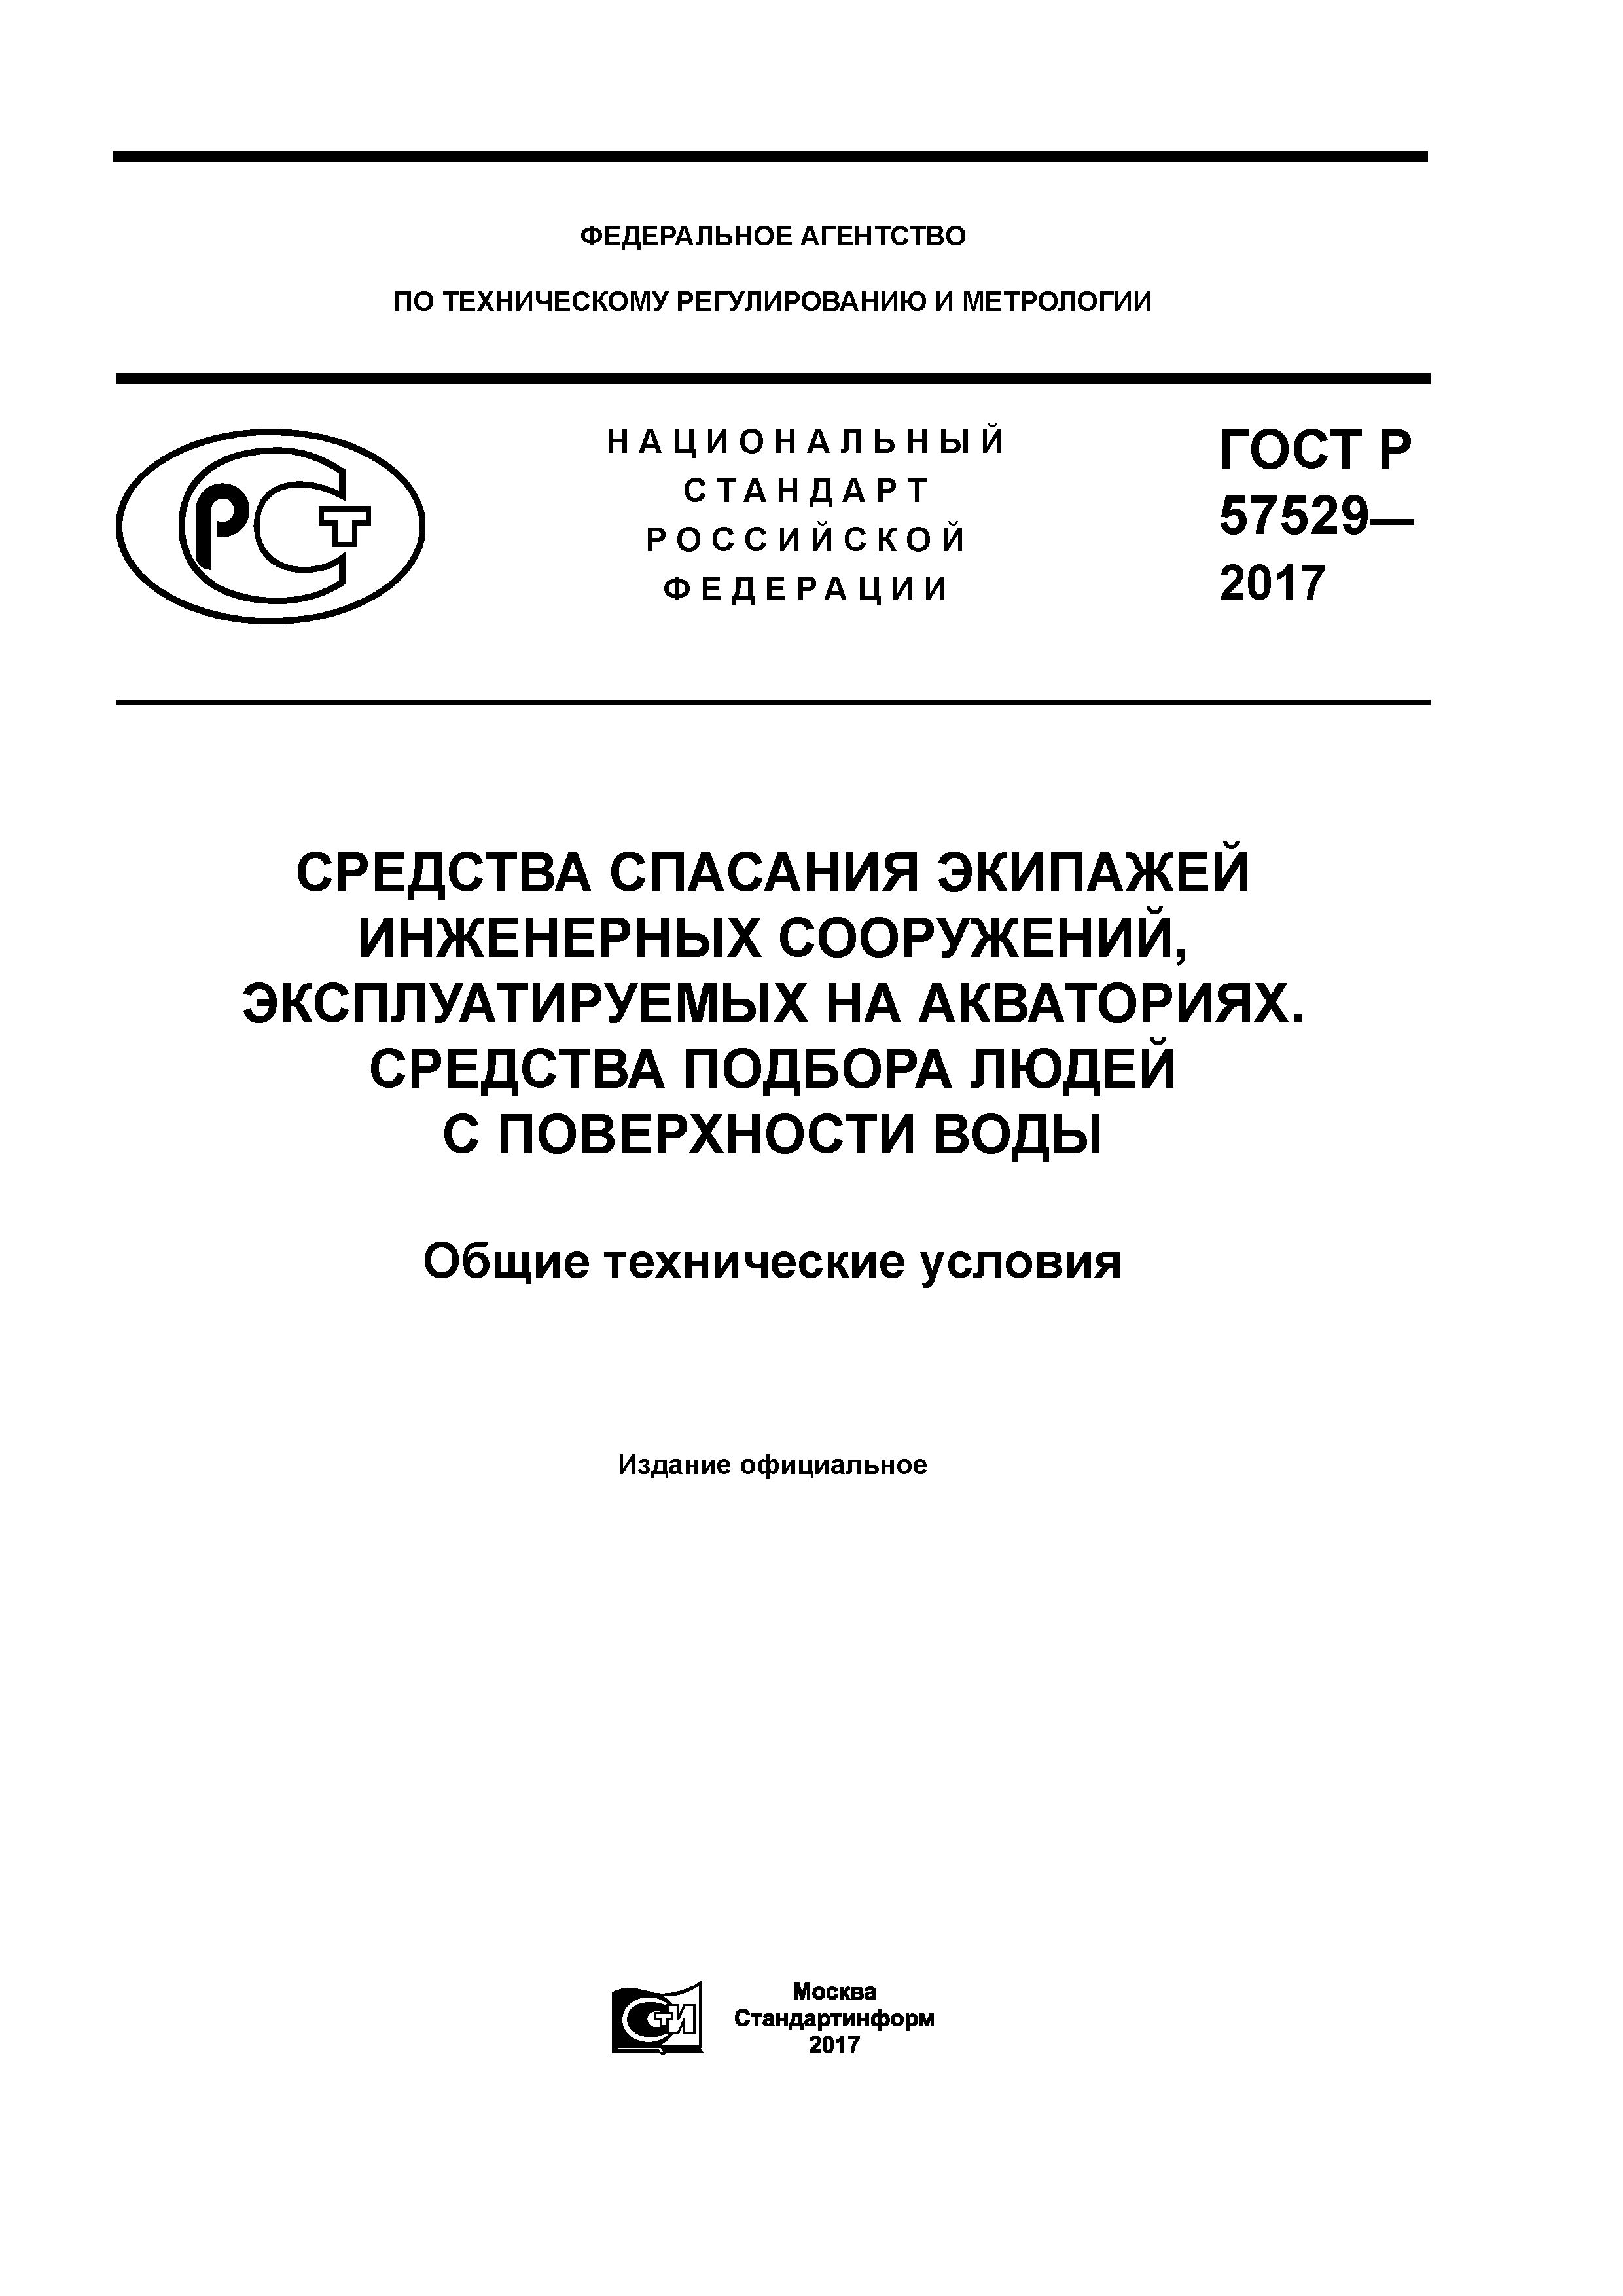 ГОСТ Р 57529-2017